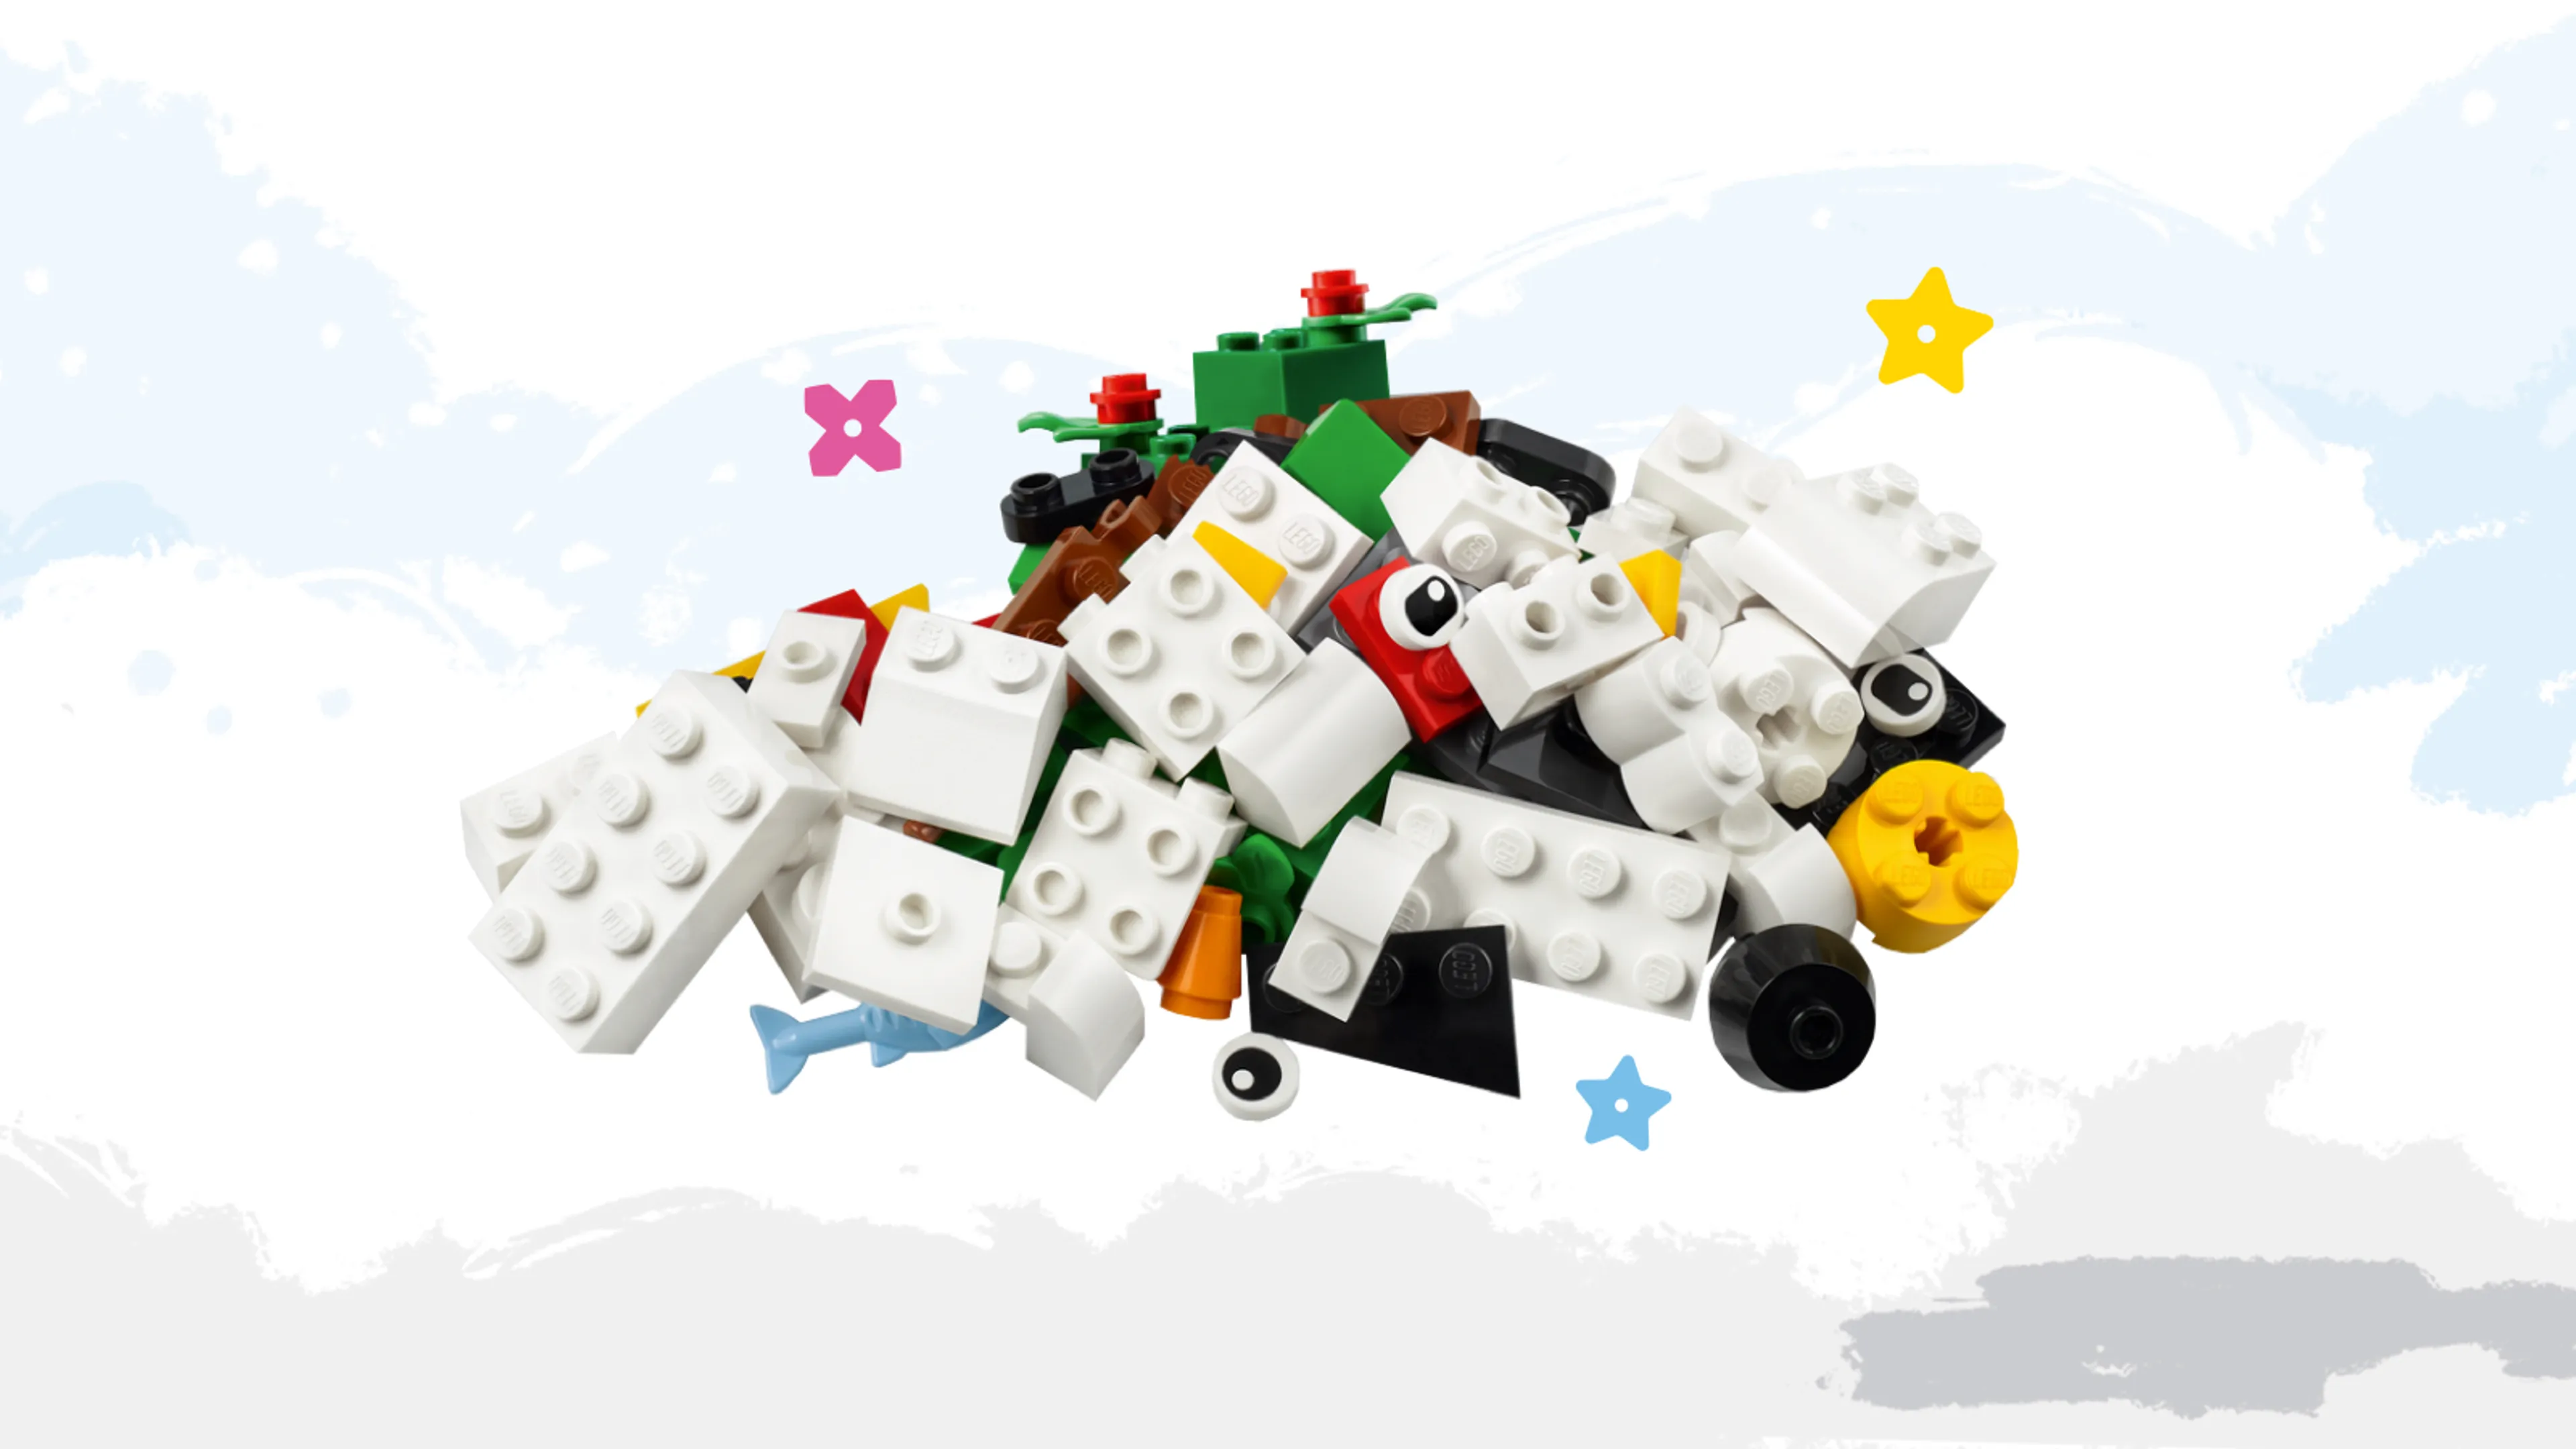 A pile of LEGO bricks